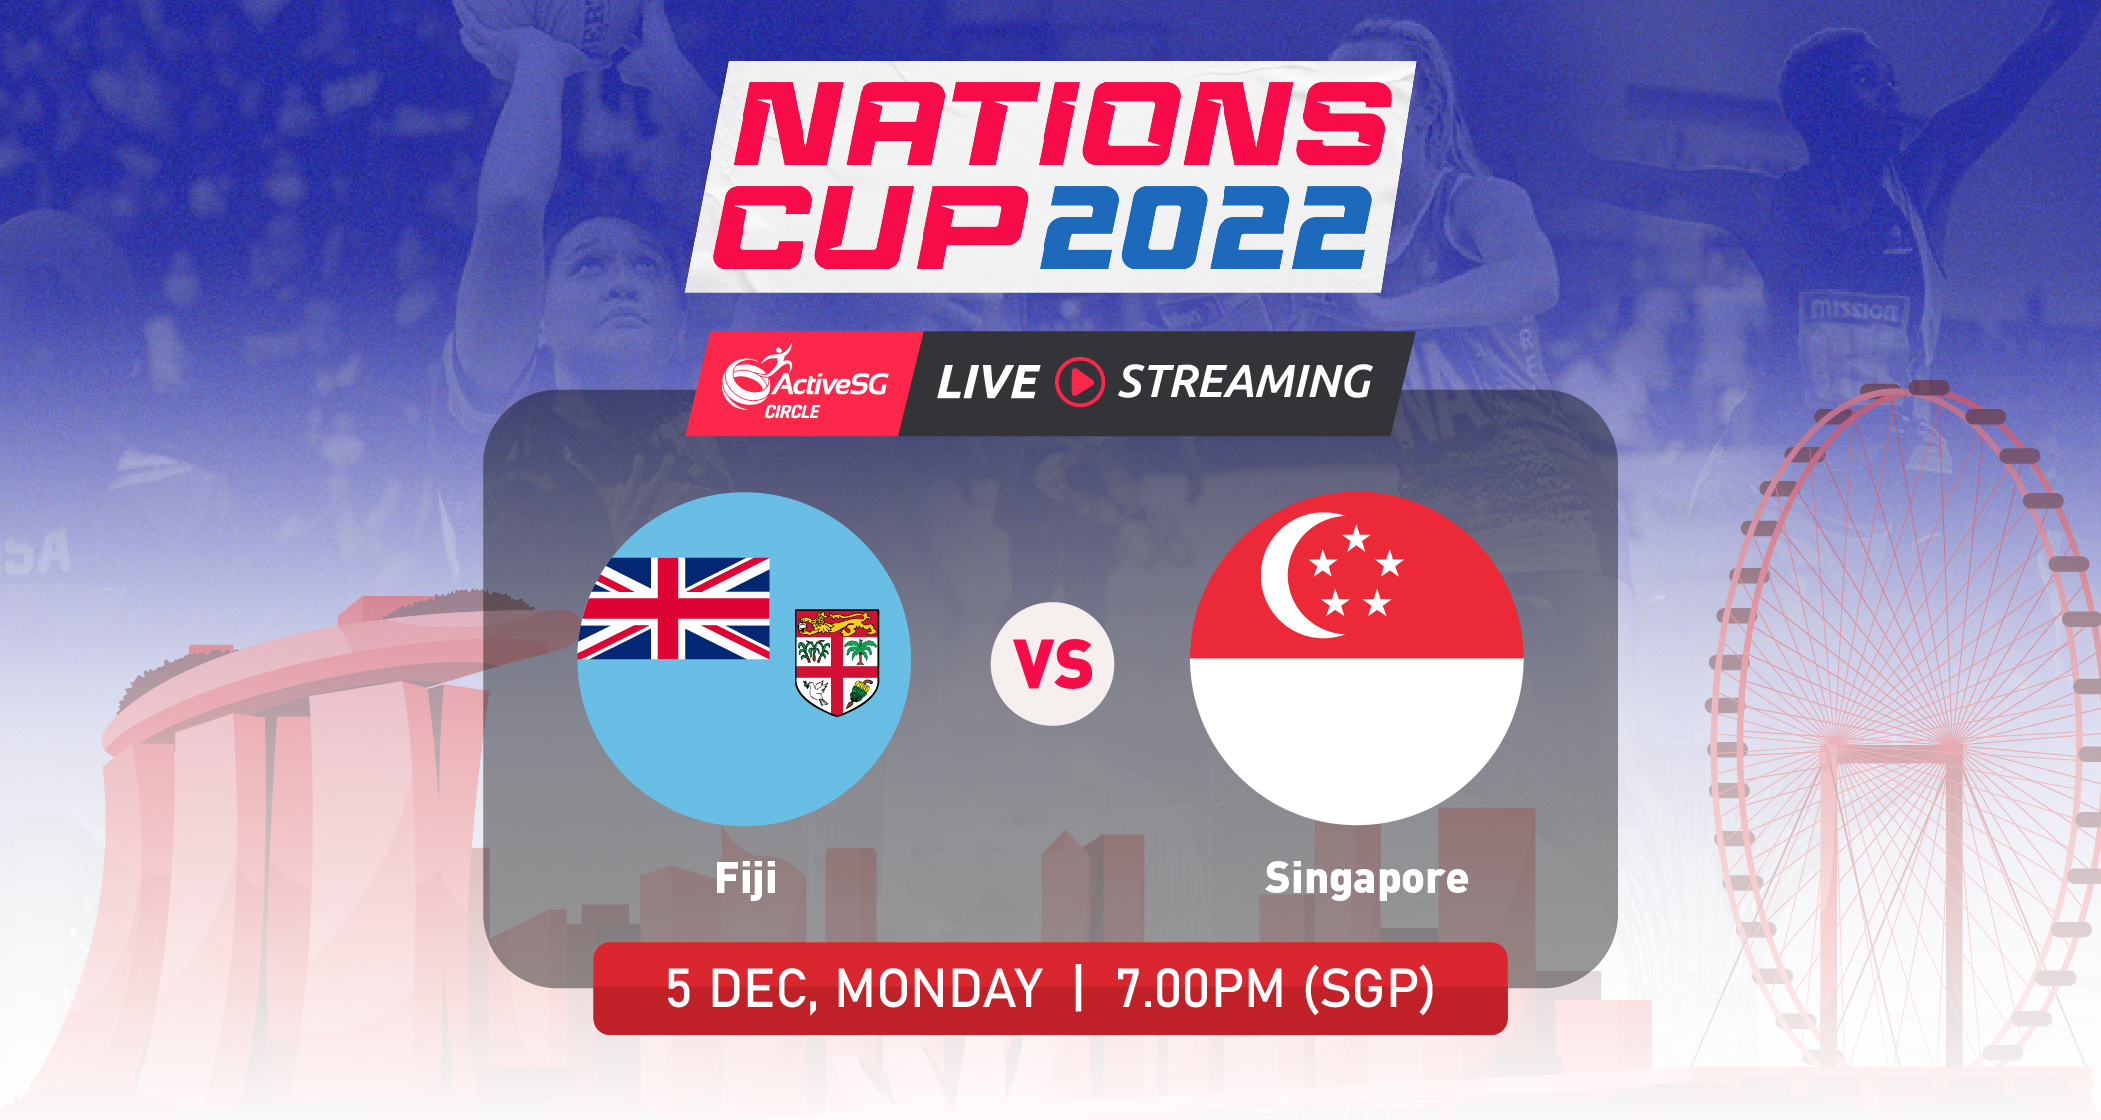 Fiji 🇫🇯 vs 🇸🇬 Singapore | Nations Cup 2022